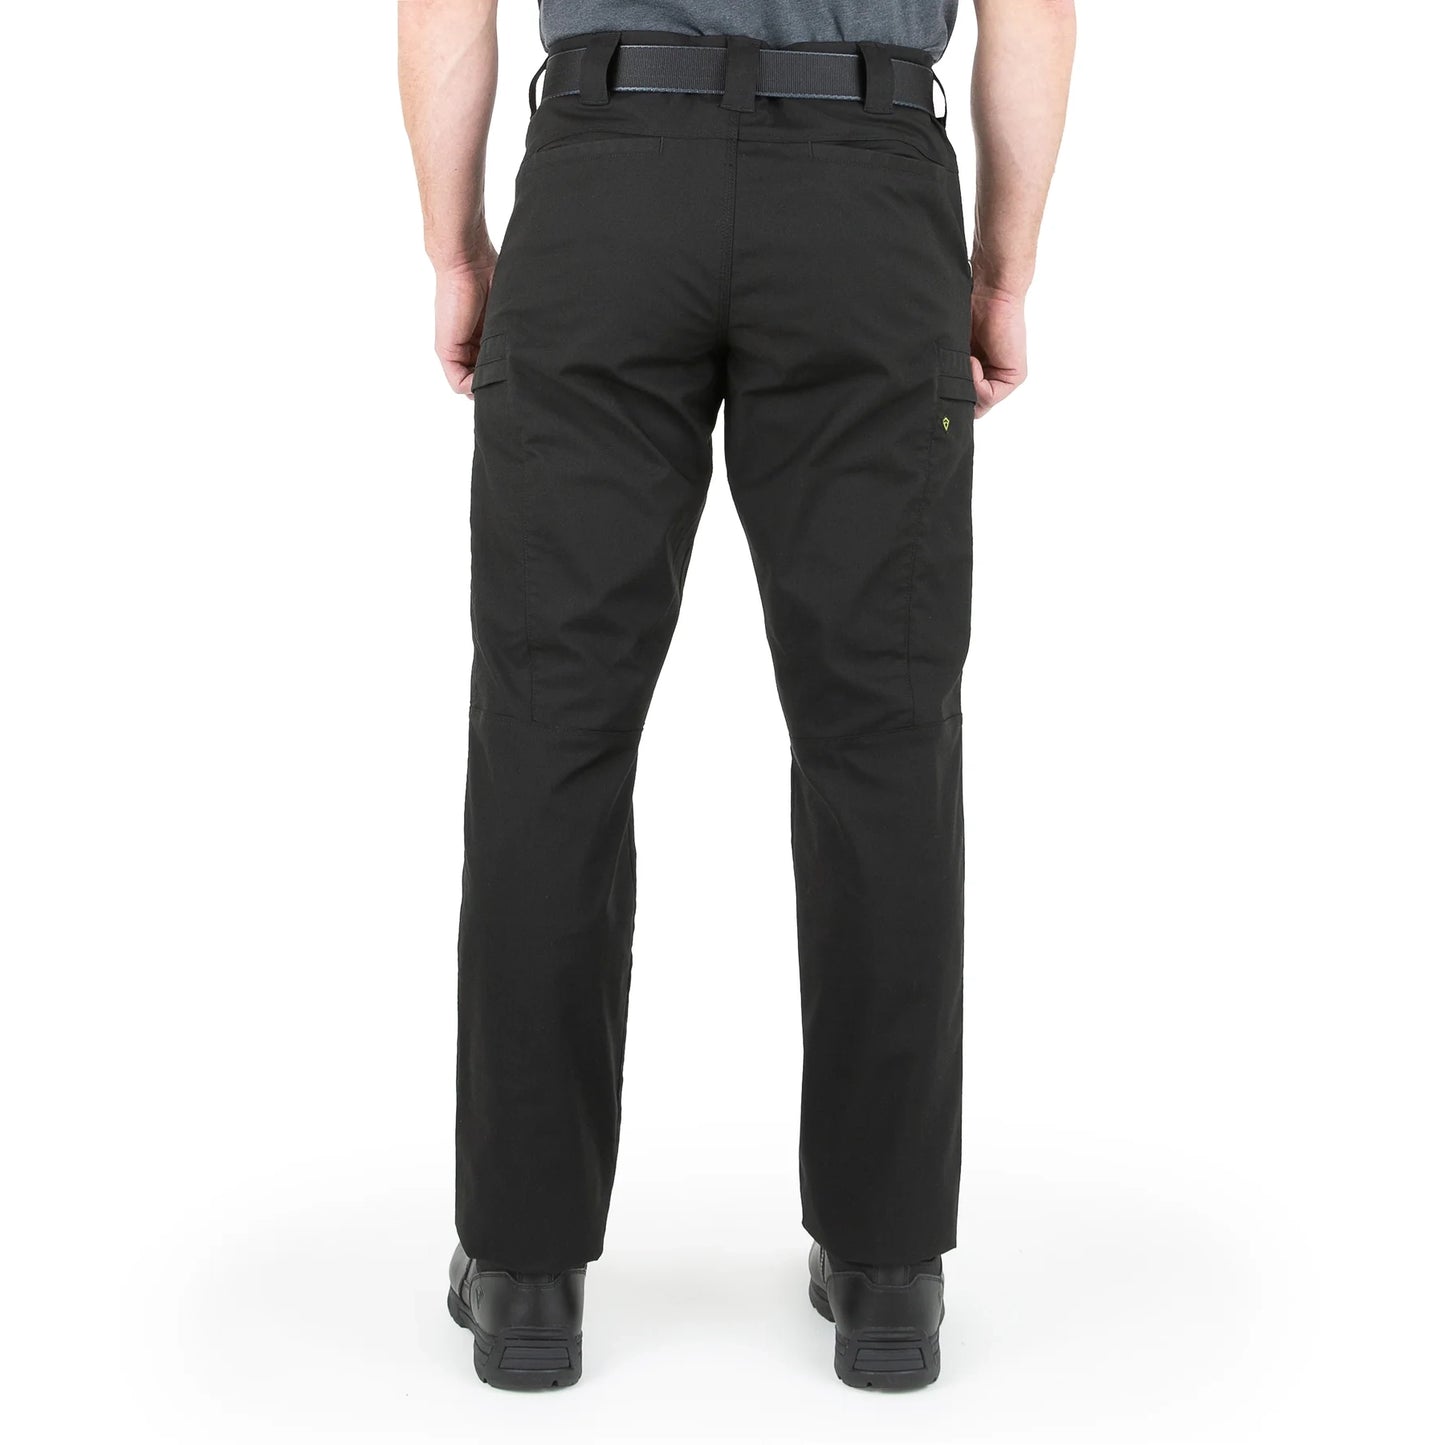 First Tactical Men's A2 Pants - Black